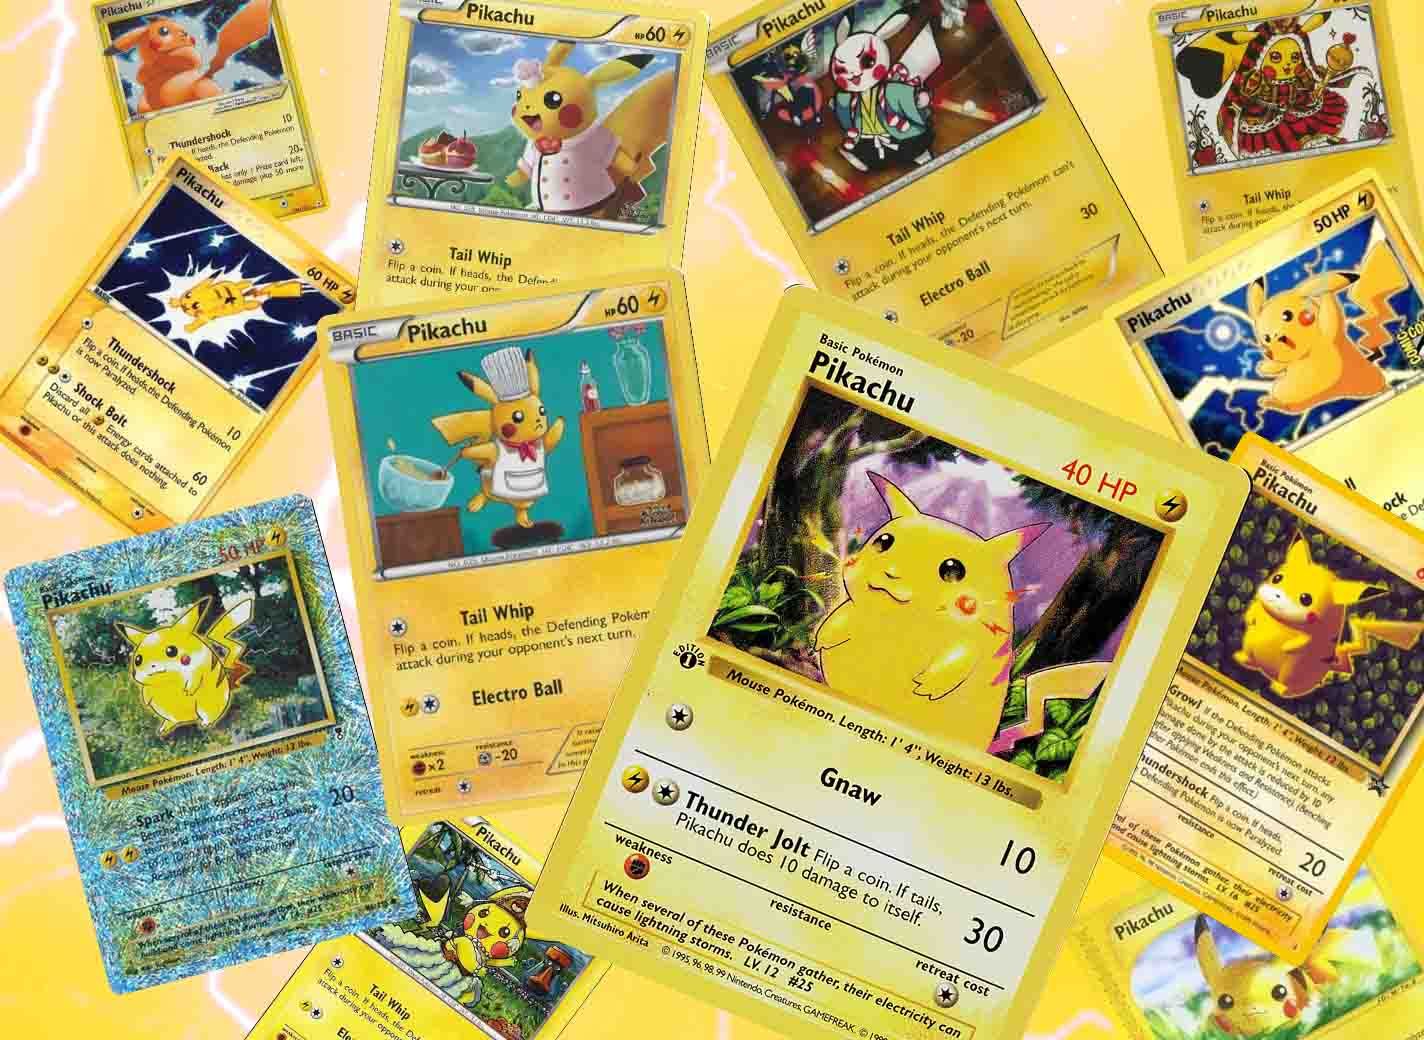 Pikachu - carte Pokémon 35/108 Pokémon XY Evolutions